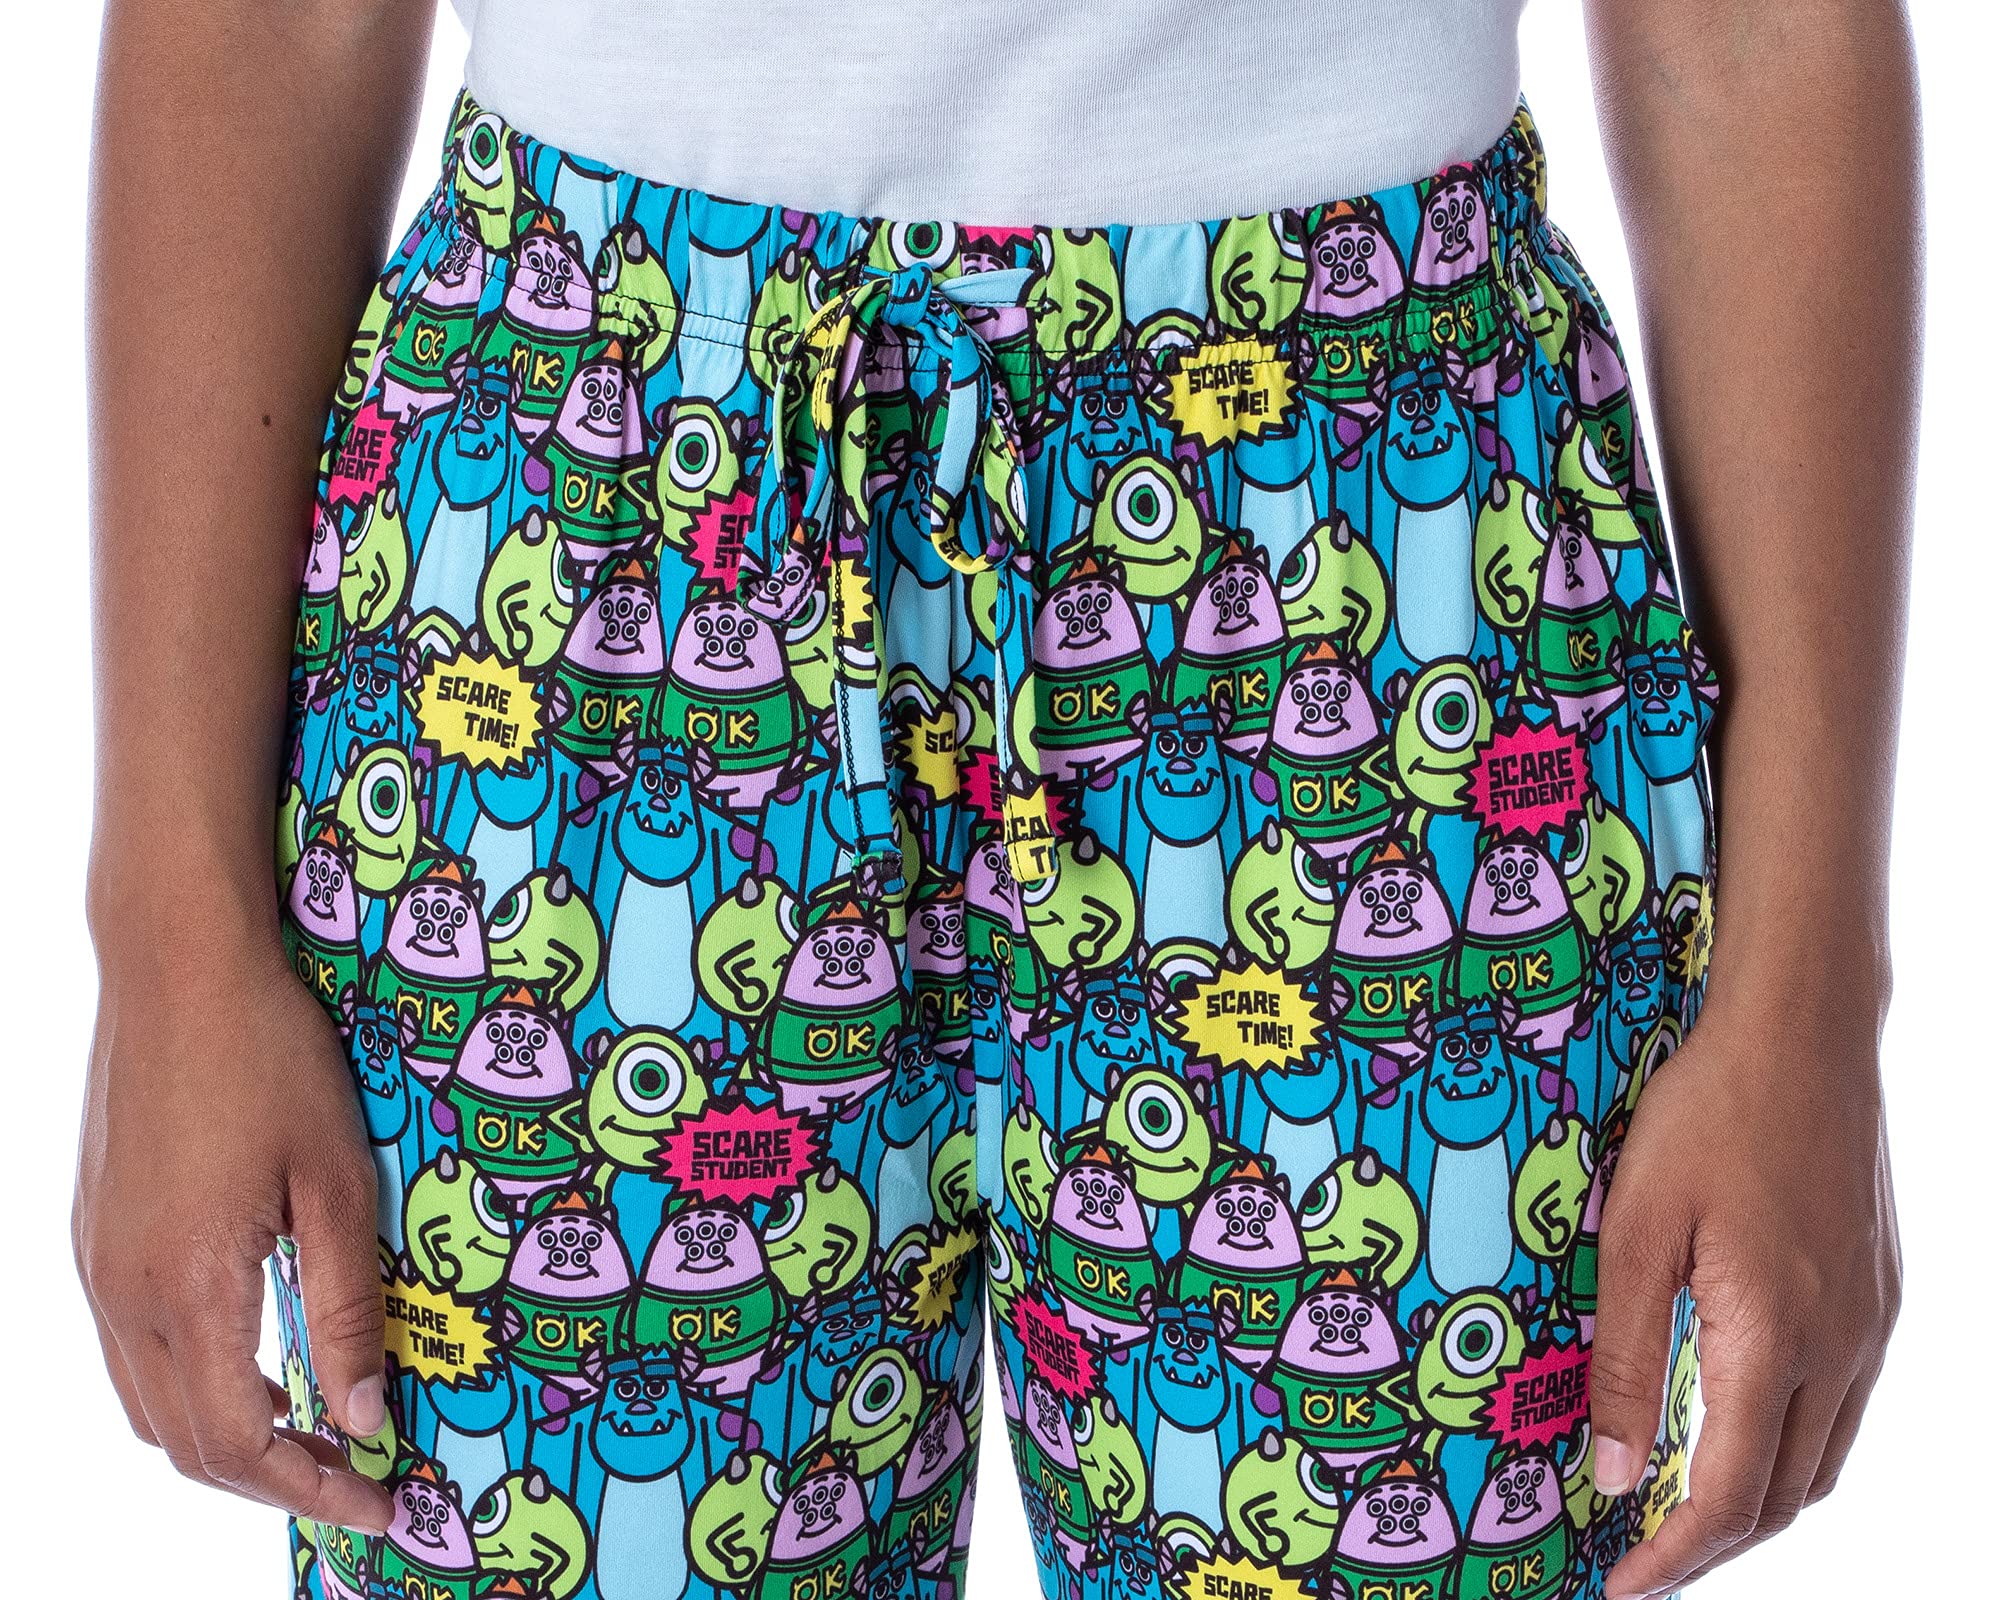 Disney Womens' Monsters University Scare Time MU Character Pajama Pants